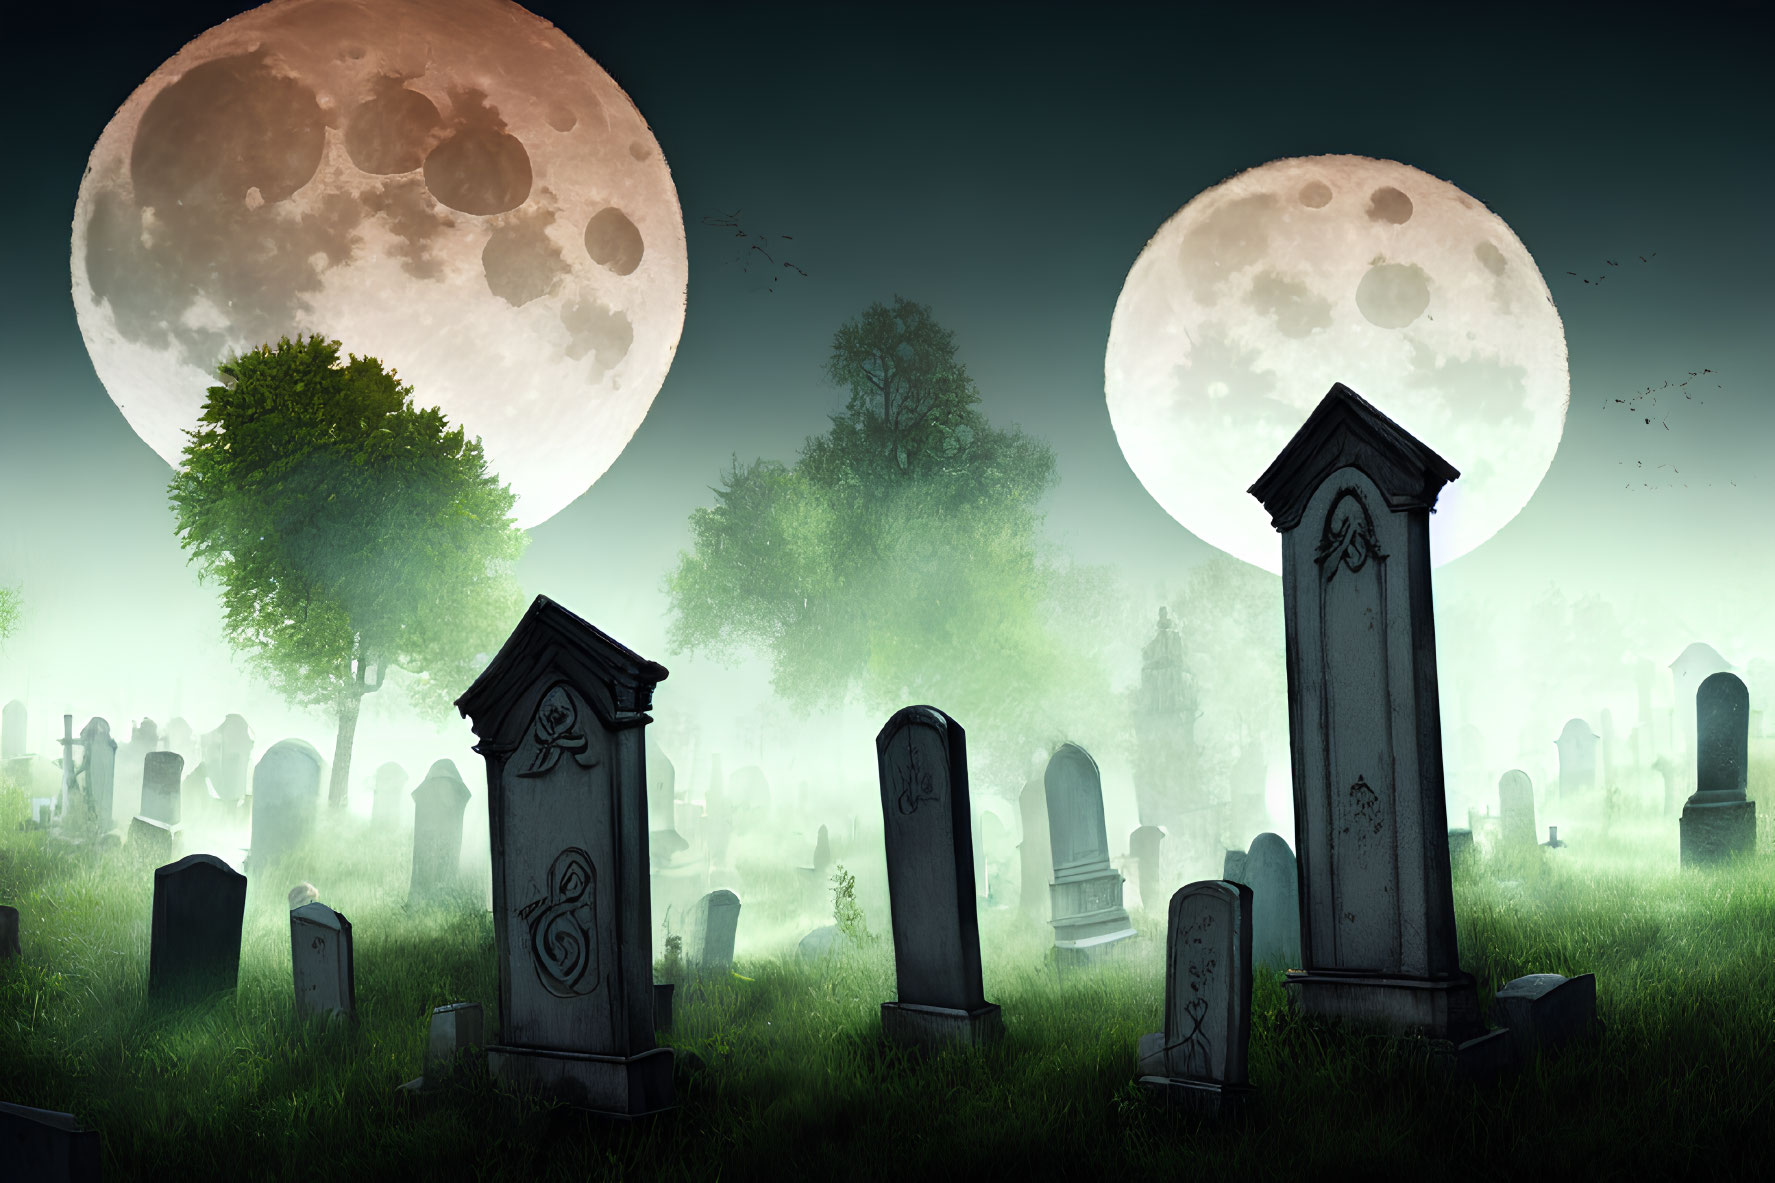 Eerie graveyard scene with two moons, mist, green lighting, Celtic crosses